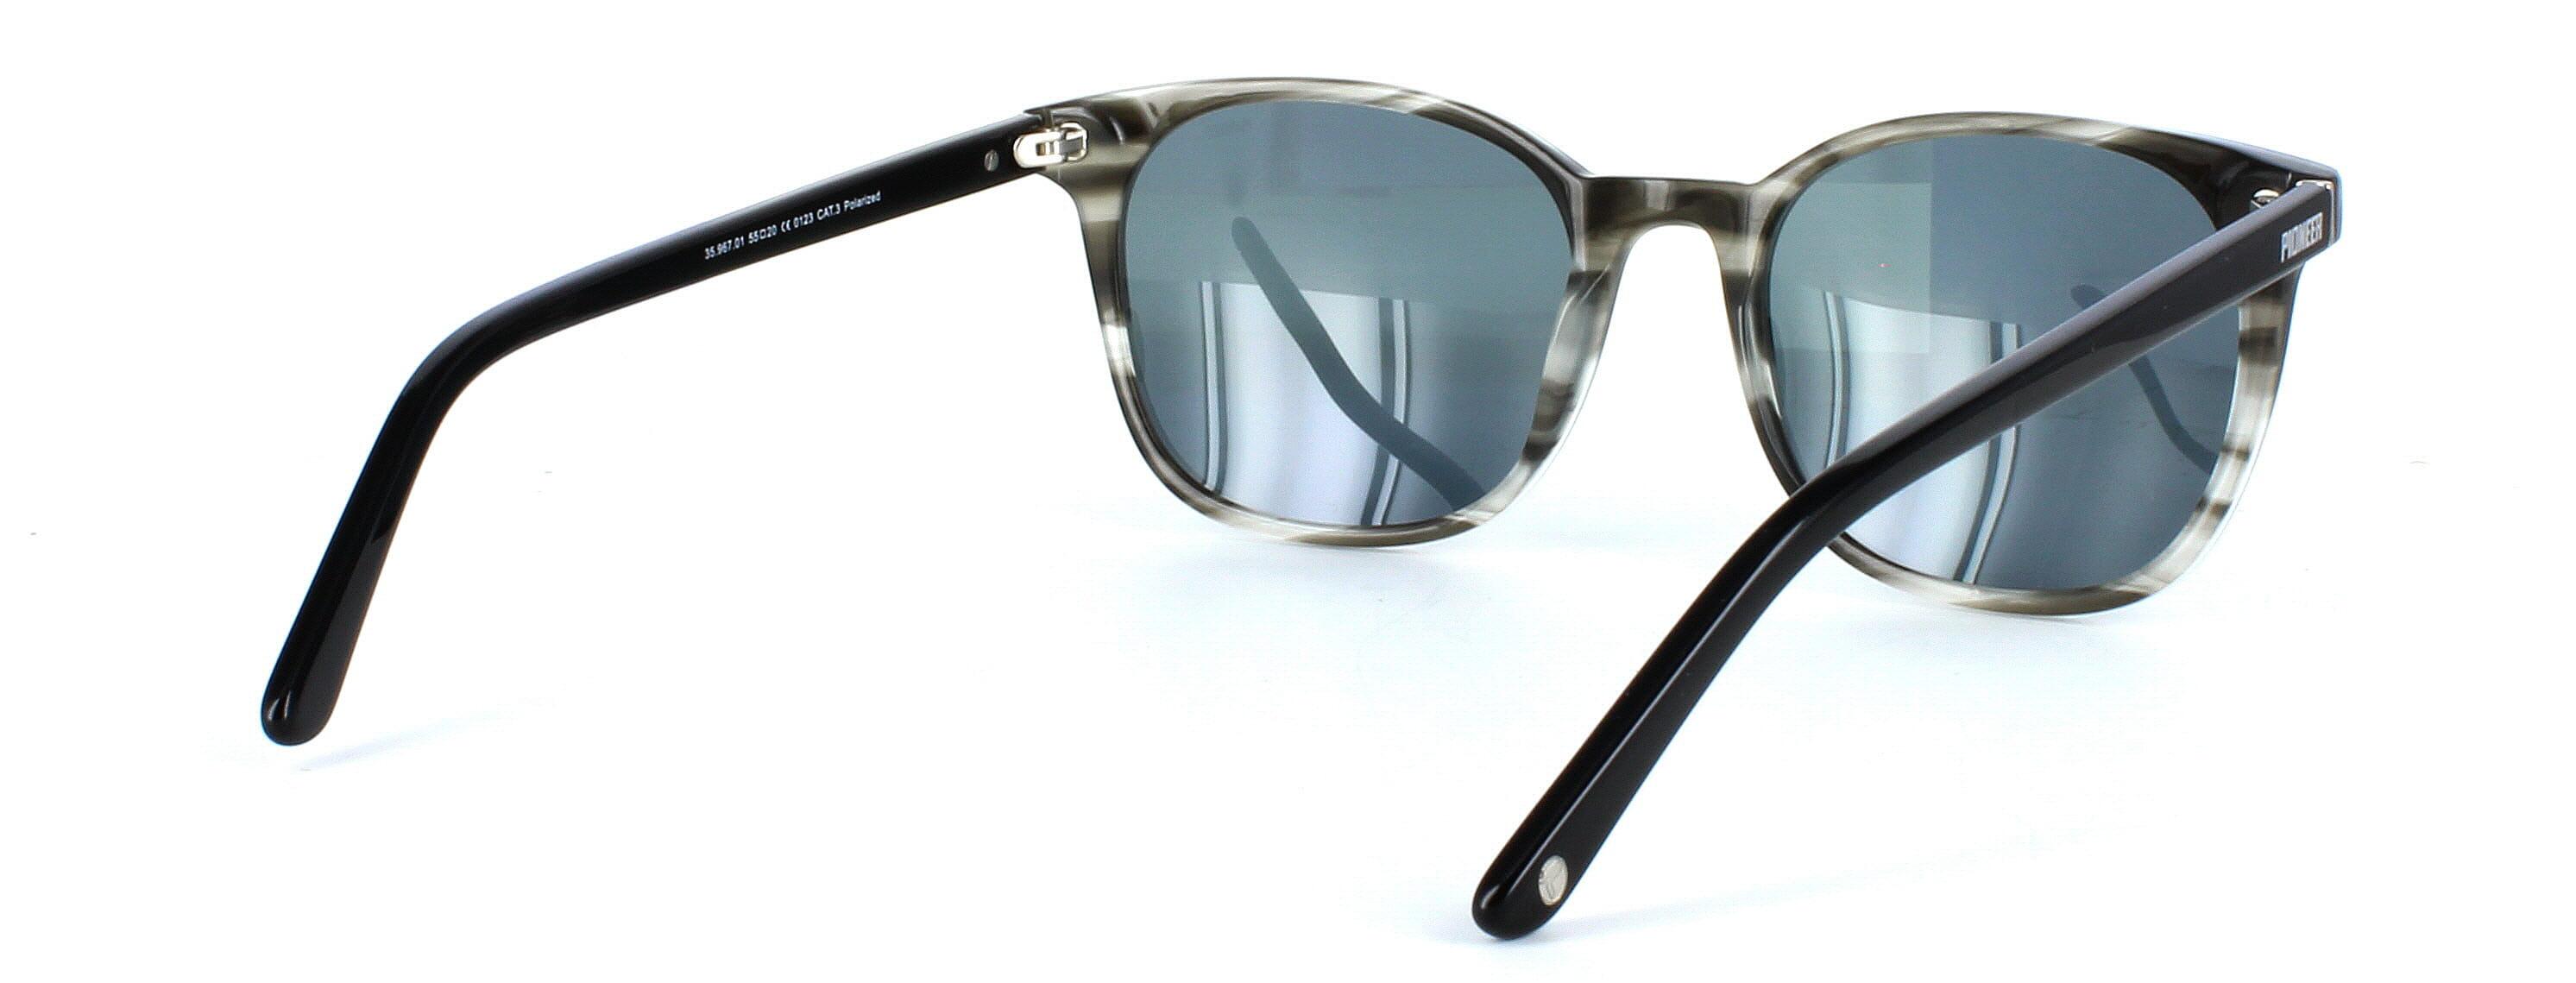 Aurelia - acetate prescription sunglasses for women - round shaped lenses - image view 5